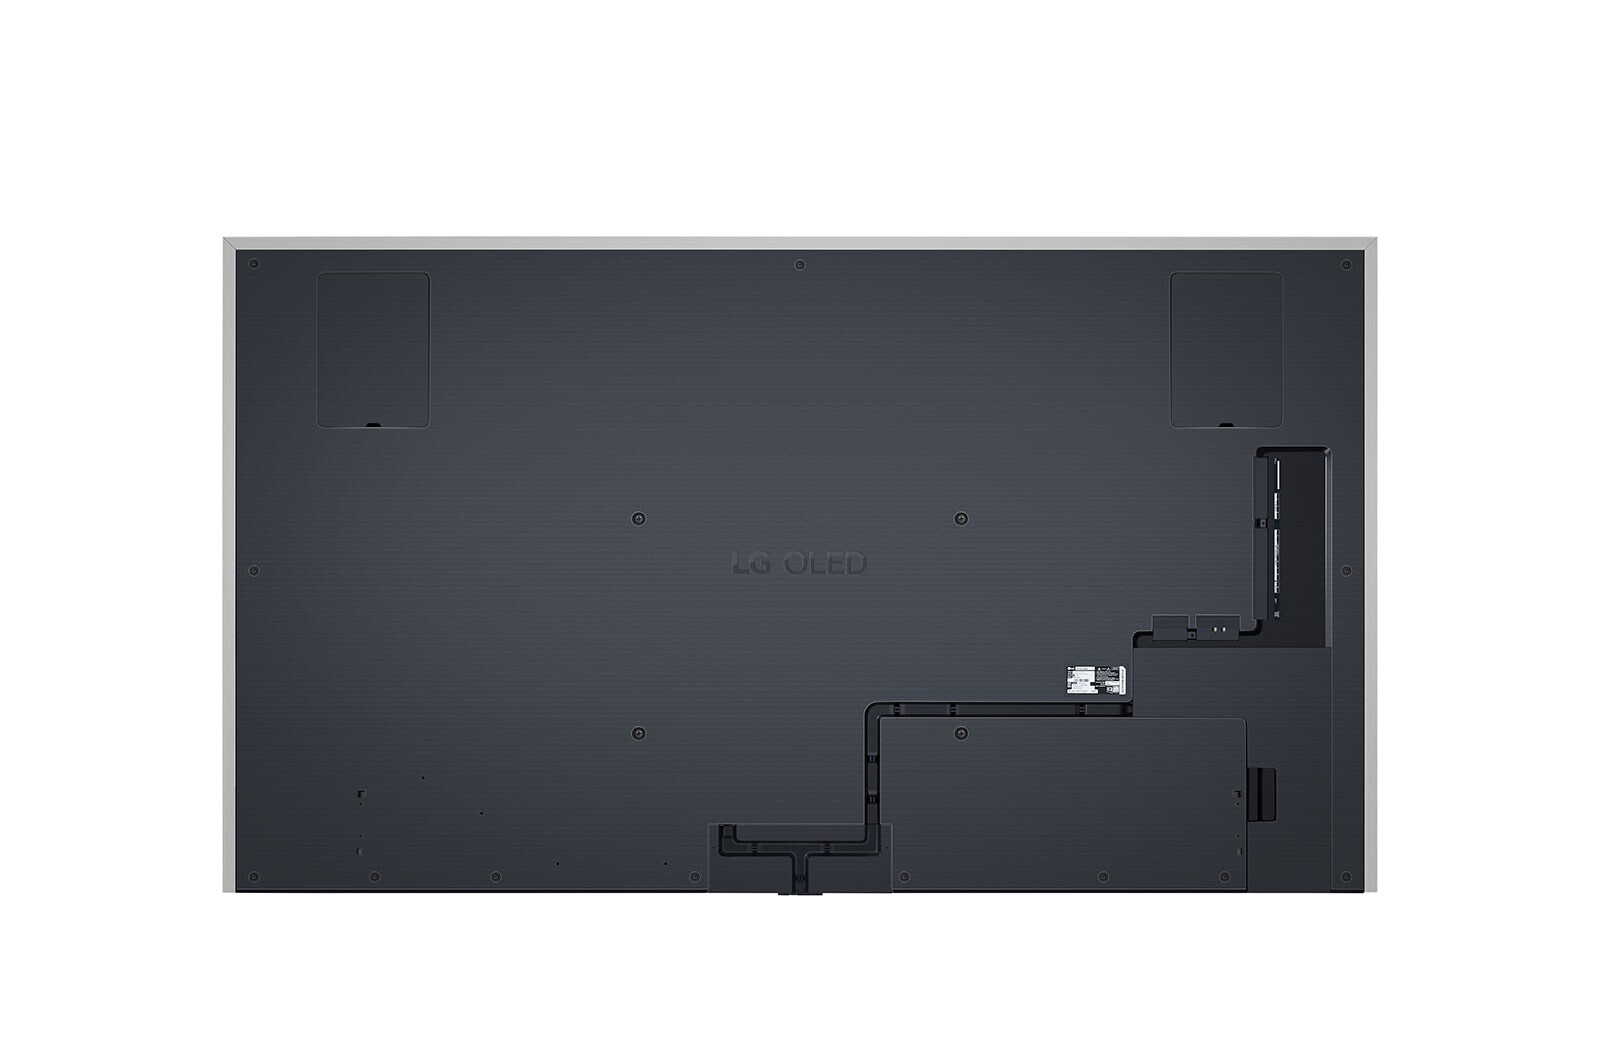 LG G2 97-inch OLED evo Gallery TV | LG USA